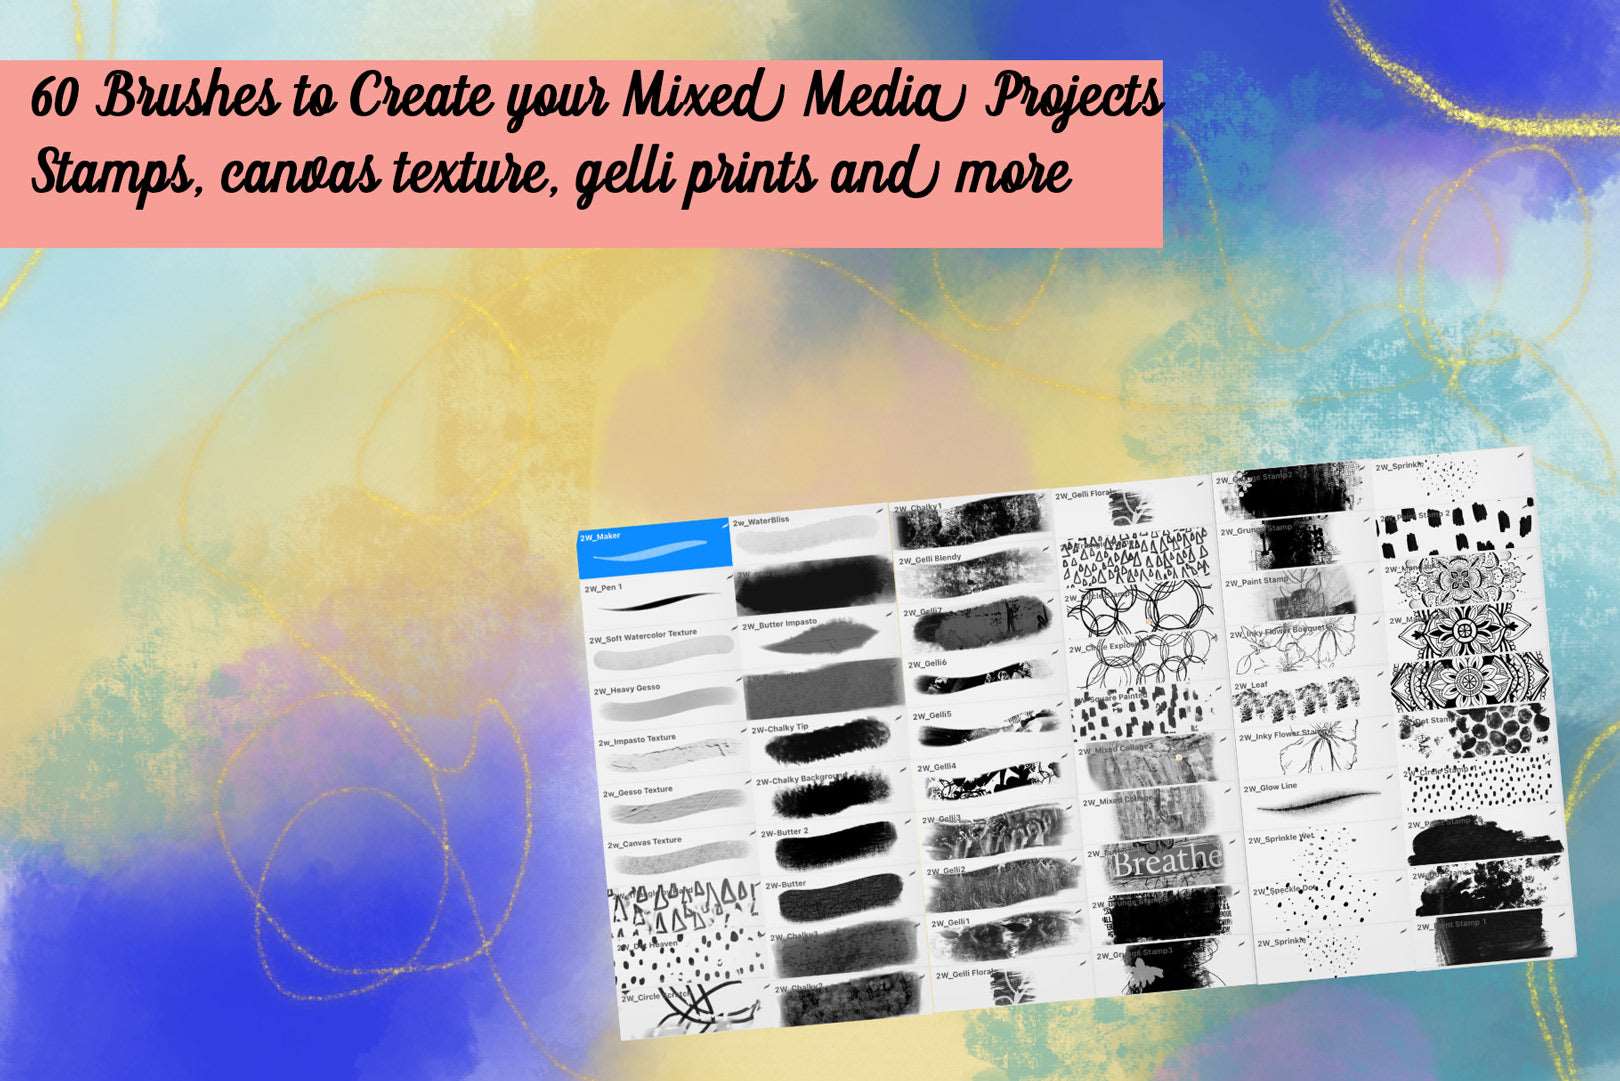 Mixed Media Digital Art Journal Procreate Brushes  Set 1